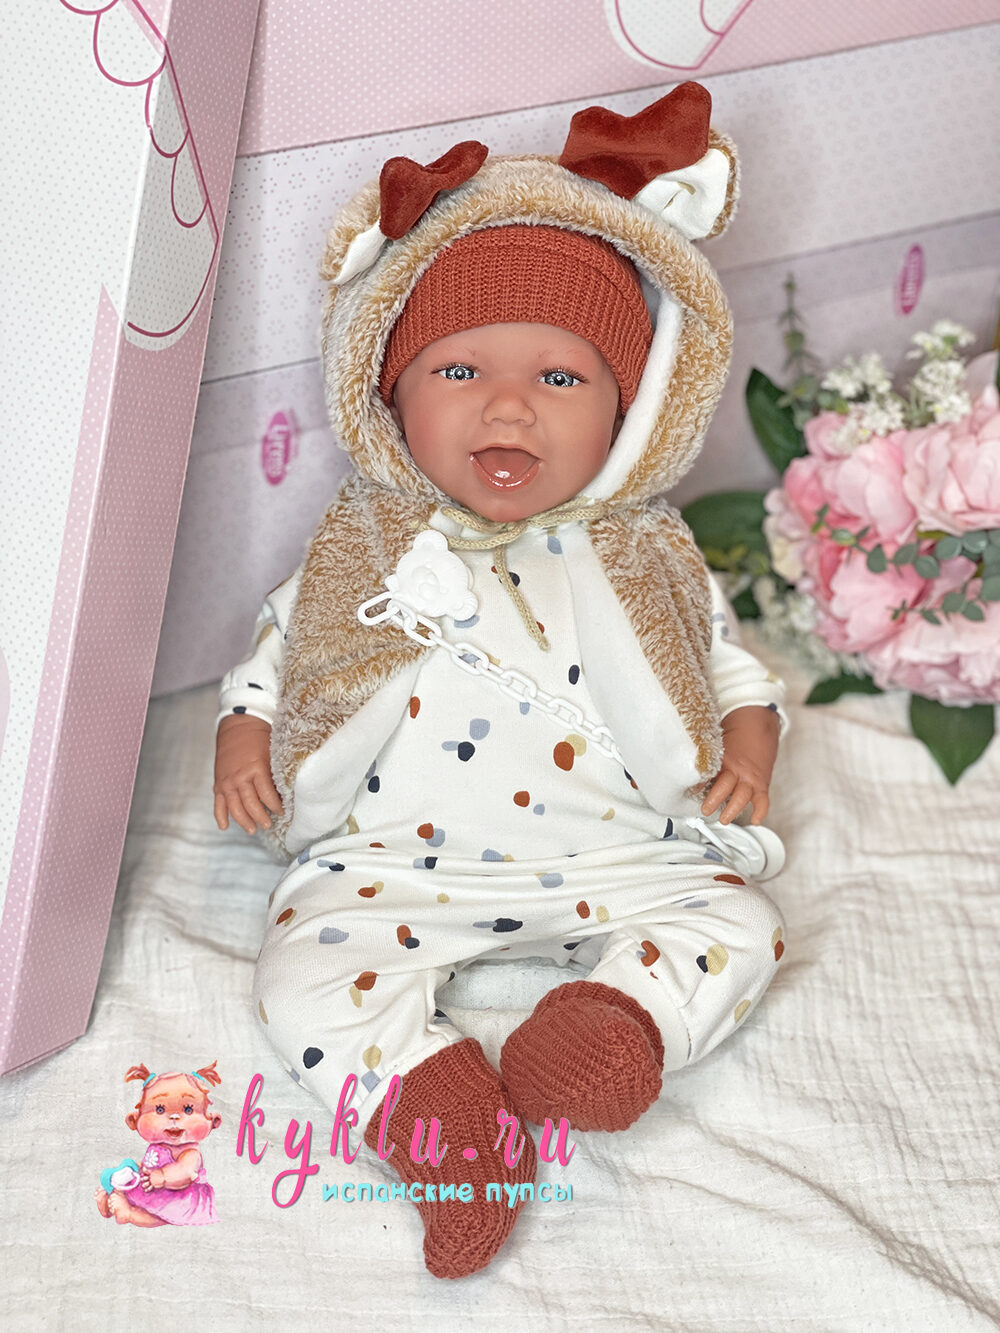 Девочка младенец улыбашка в костюме олененка